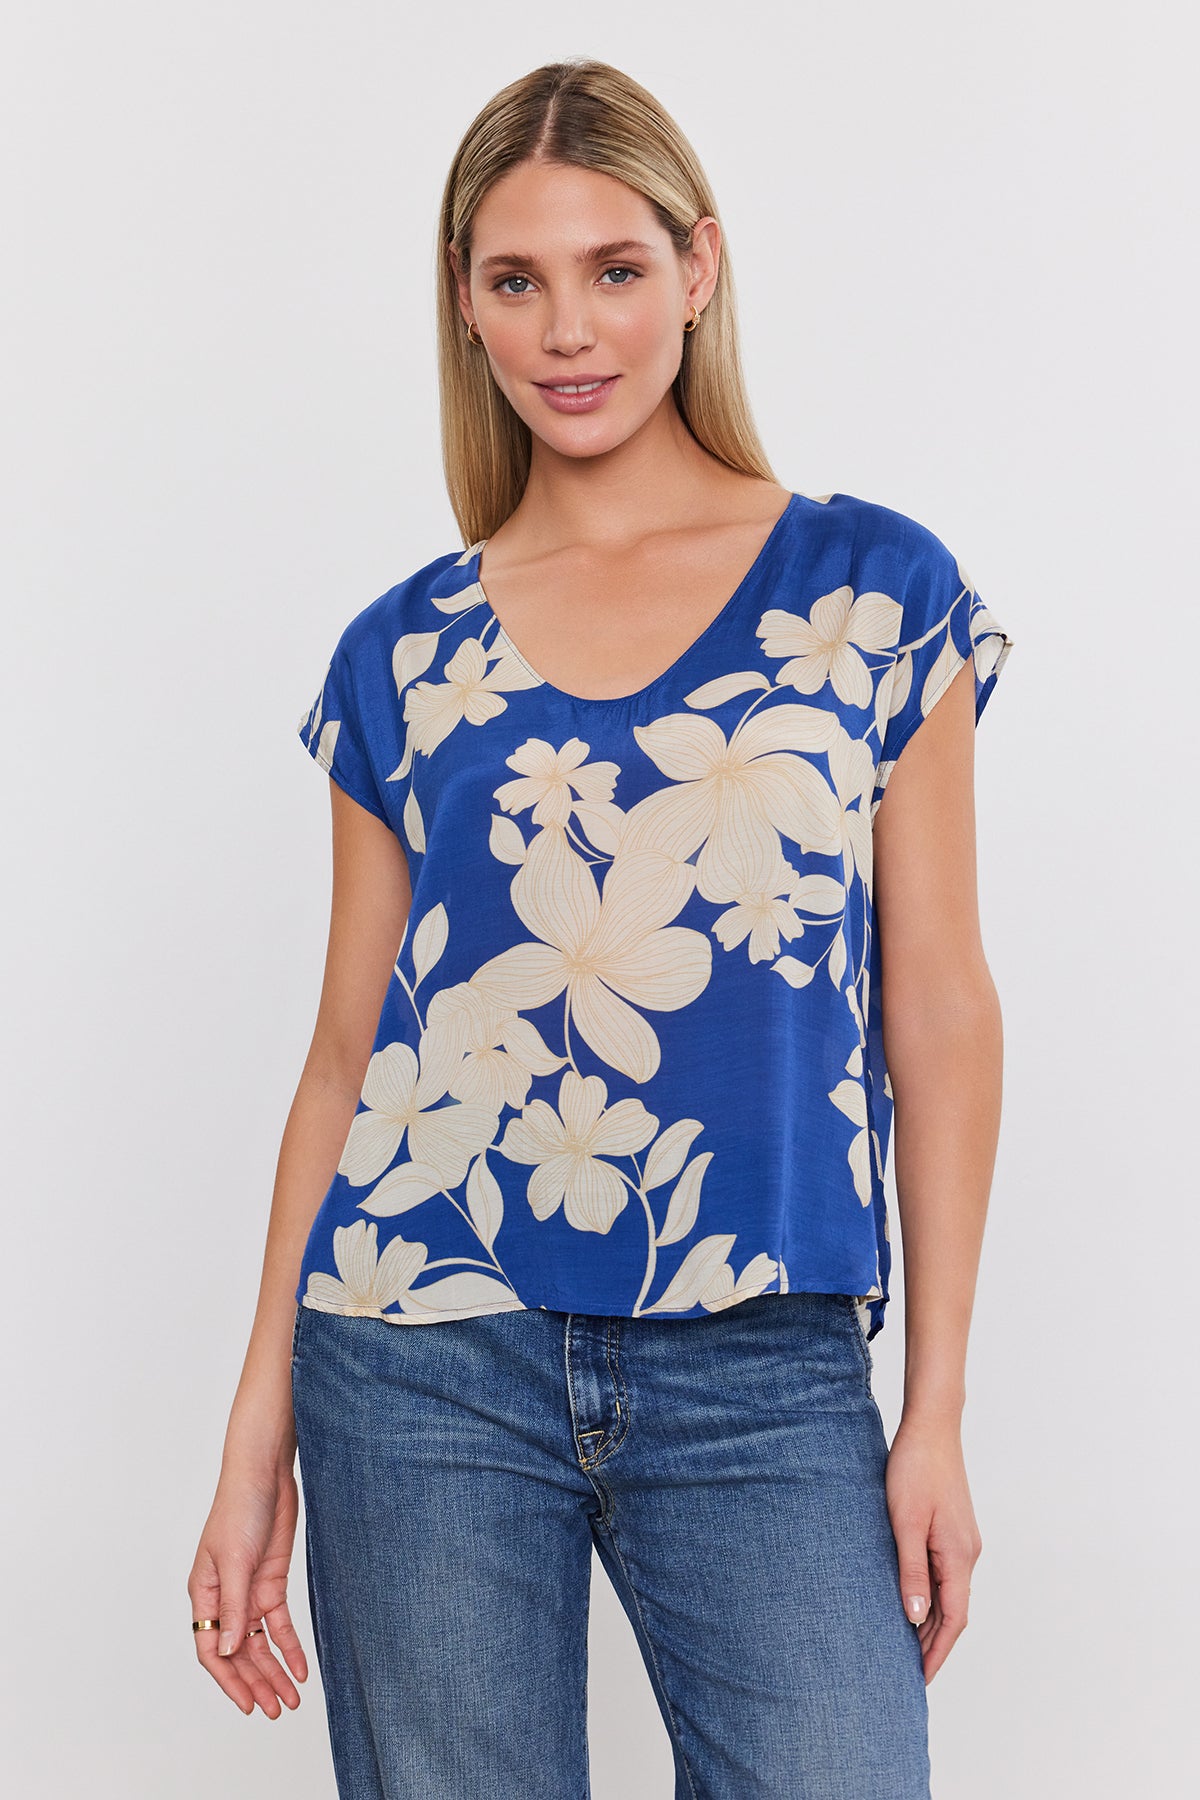 A model wearing a Velvet by Graham & Spencer blue floral print top.-35655290421441